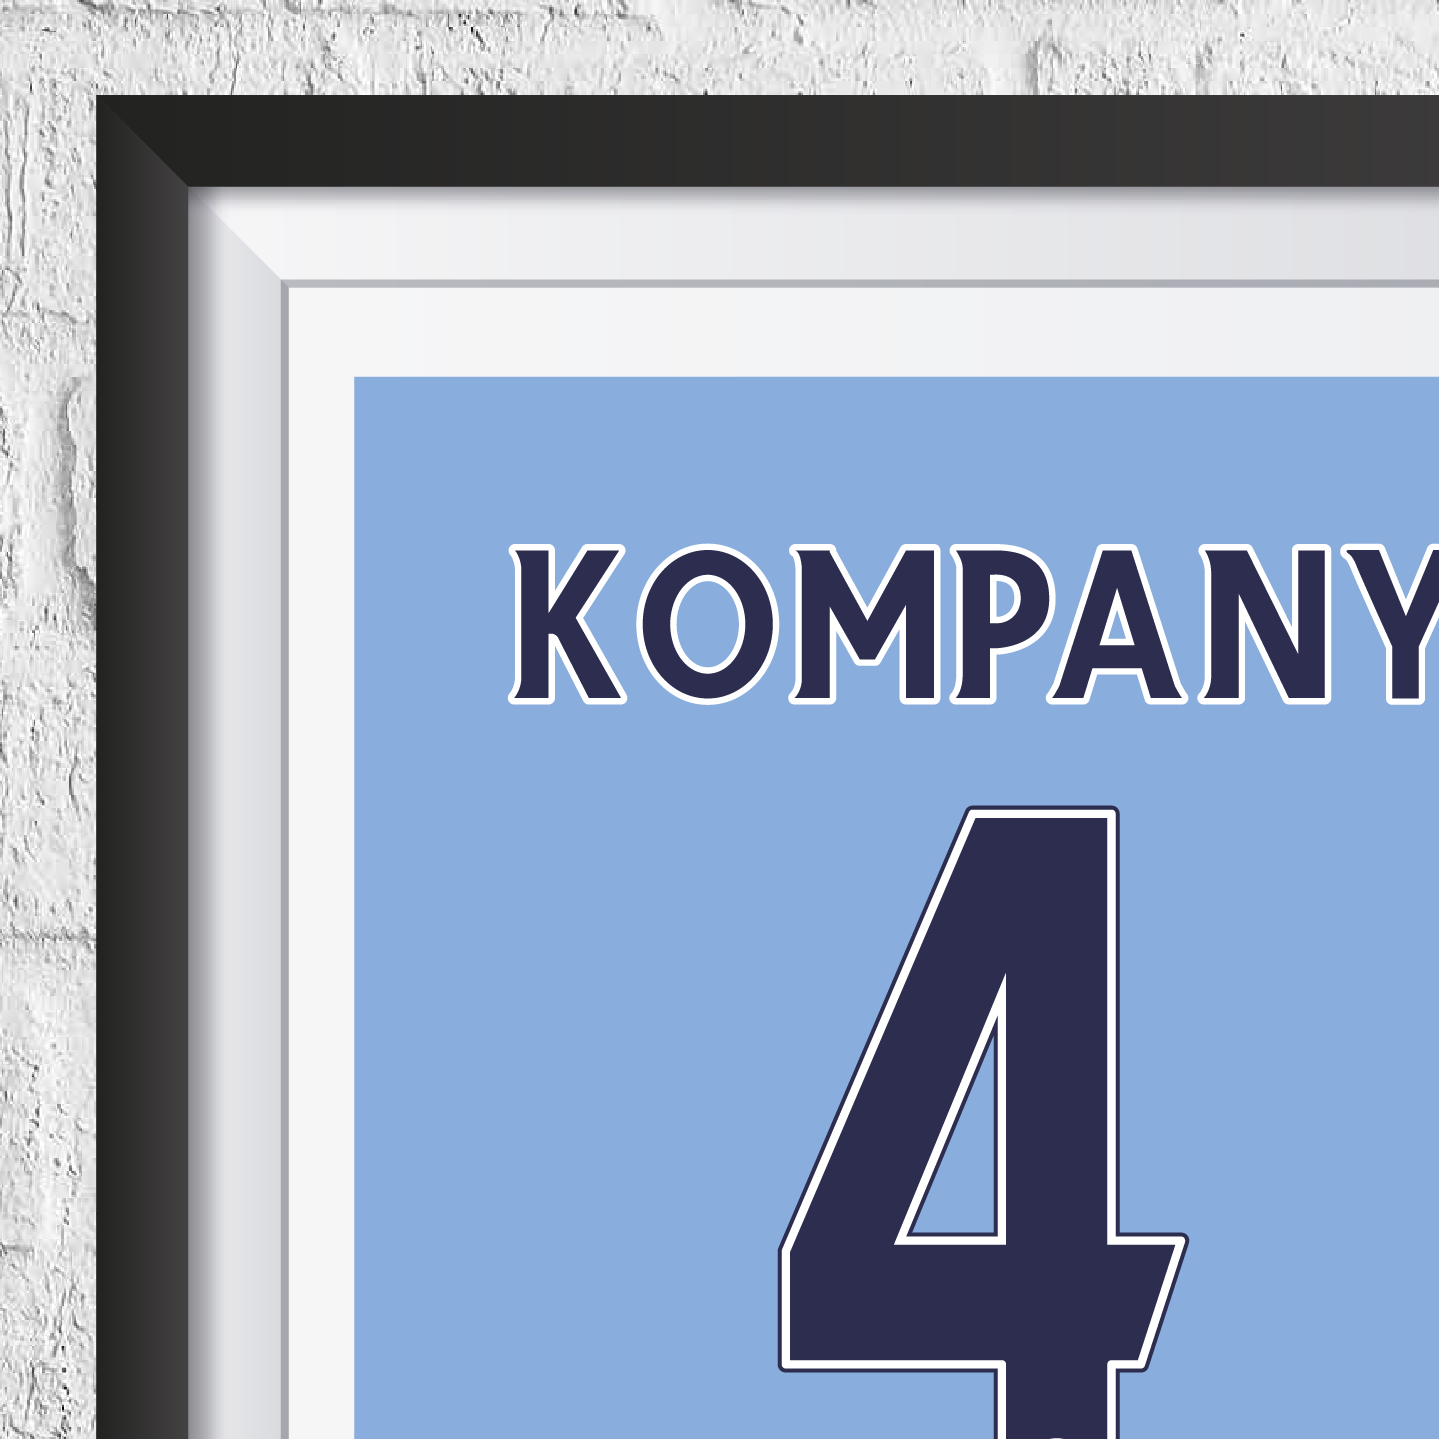 Vincent Kompany Manchester City Leyenda Estadísticas Imprimir